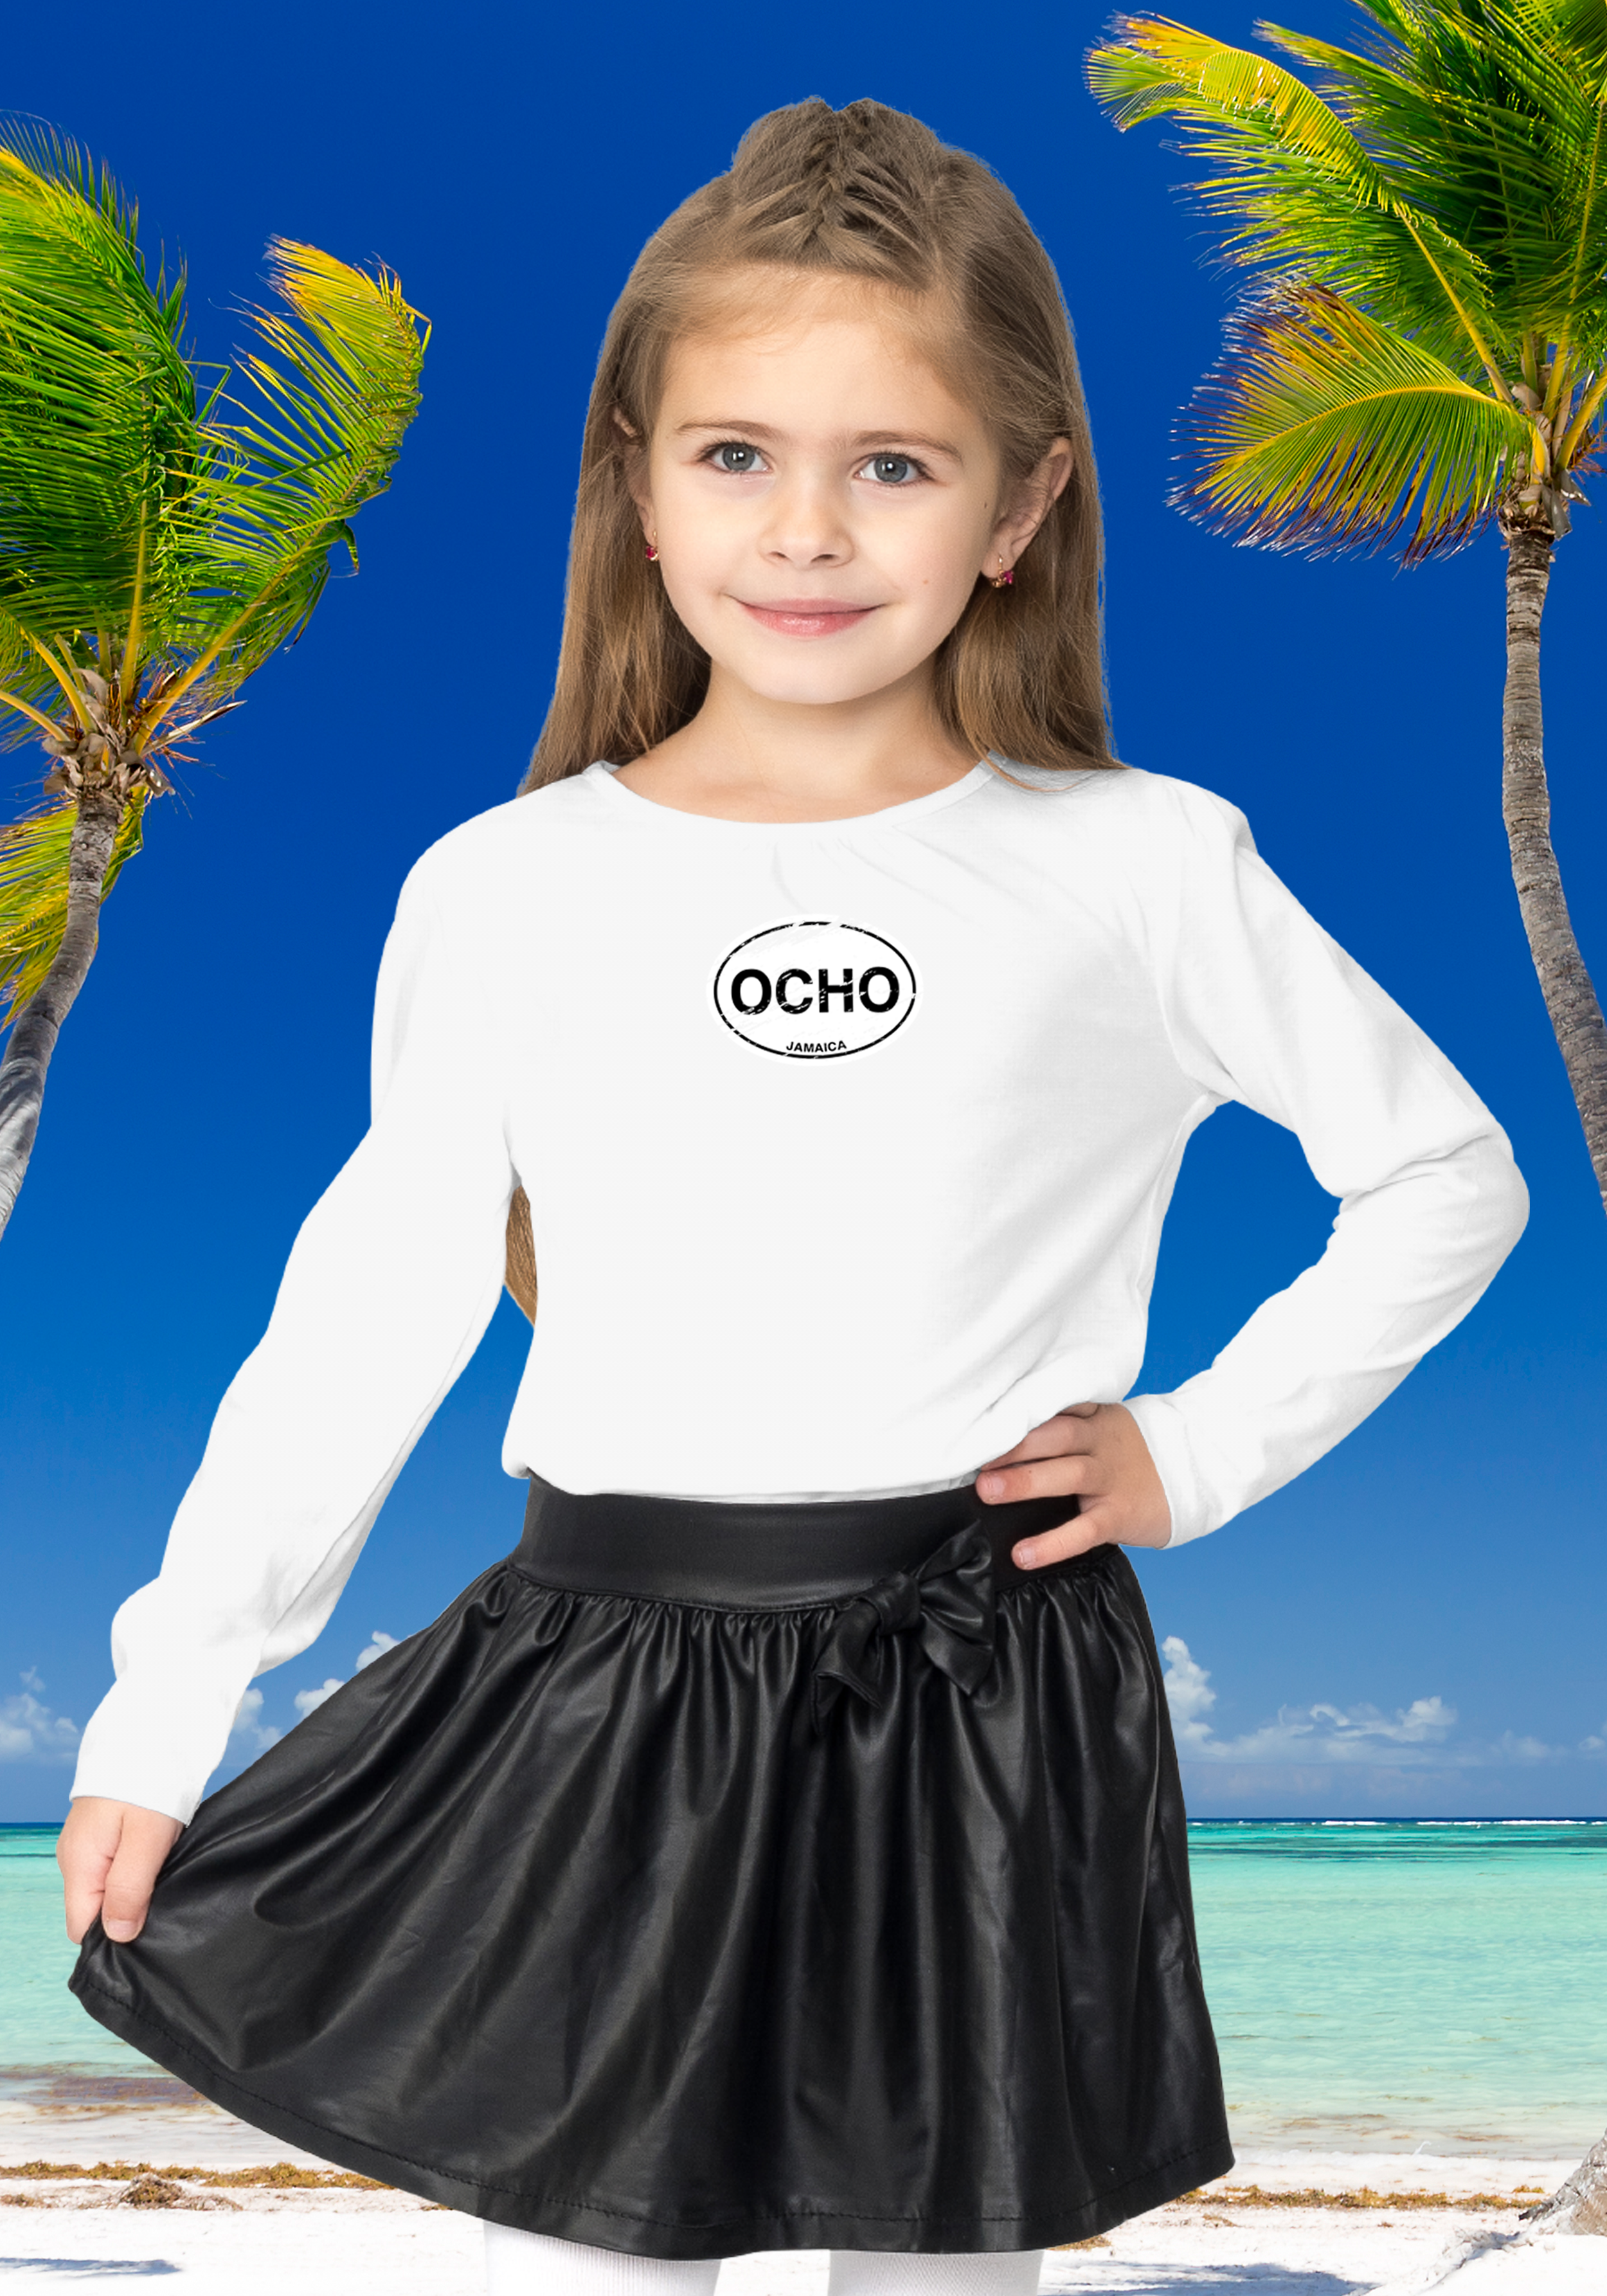 Ocho Rios Youth Classic Long Sleeve T-Shirts - My Destination Location